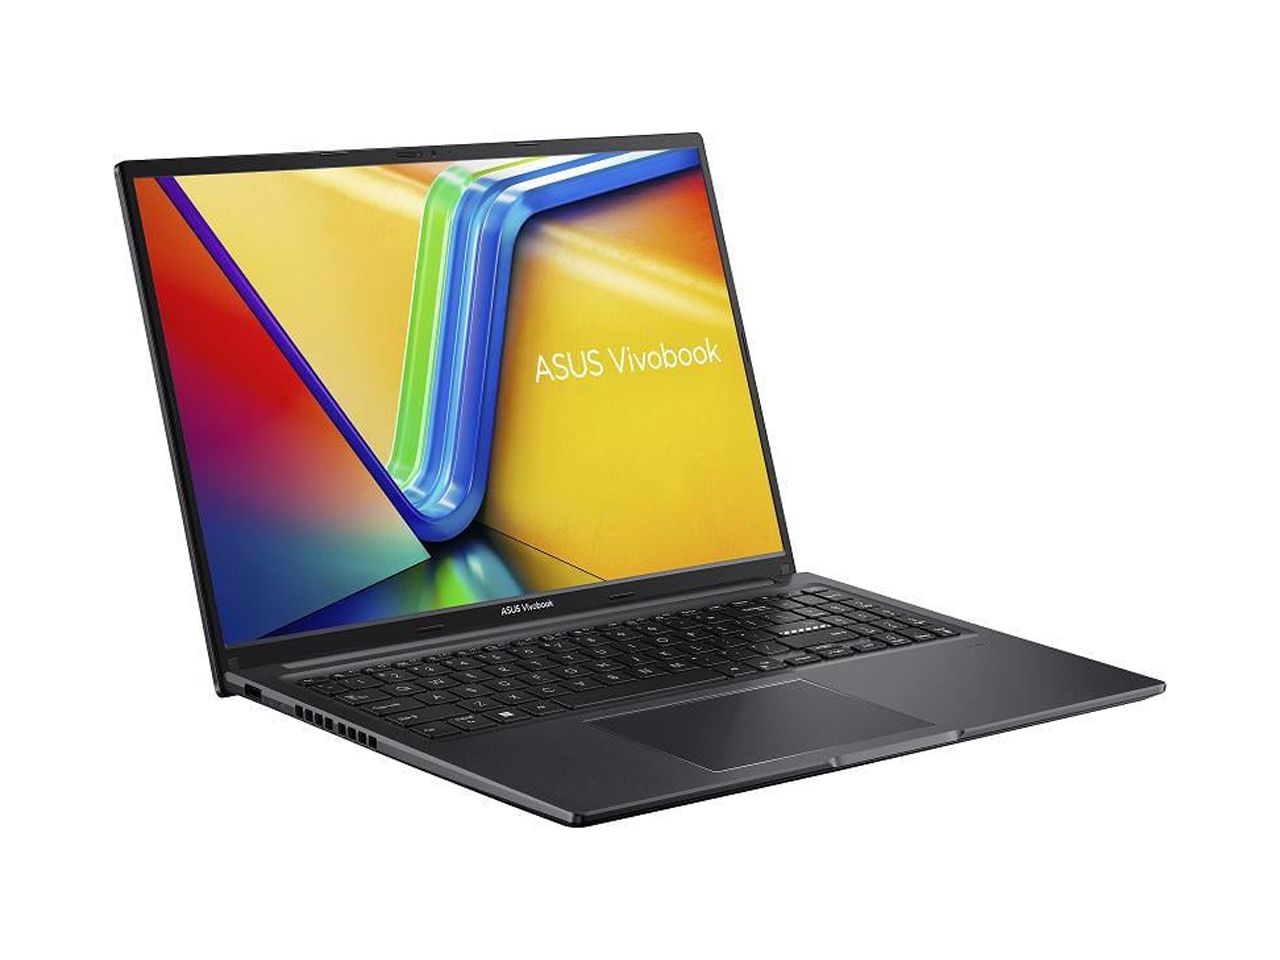 ASUS Vivobook PC Laptop, 16"  Intel Core i5-13500H CPU, 8GB RAM, 512GB SSD, Win 11 Home, Black, F1605VA-DS52 - image 4 of 10